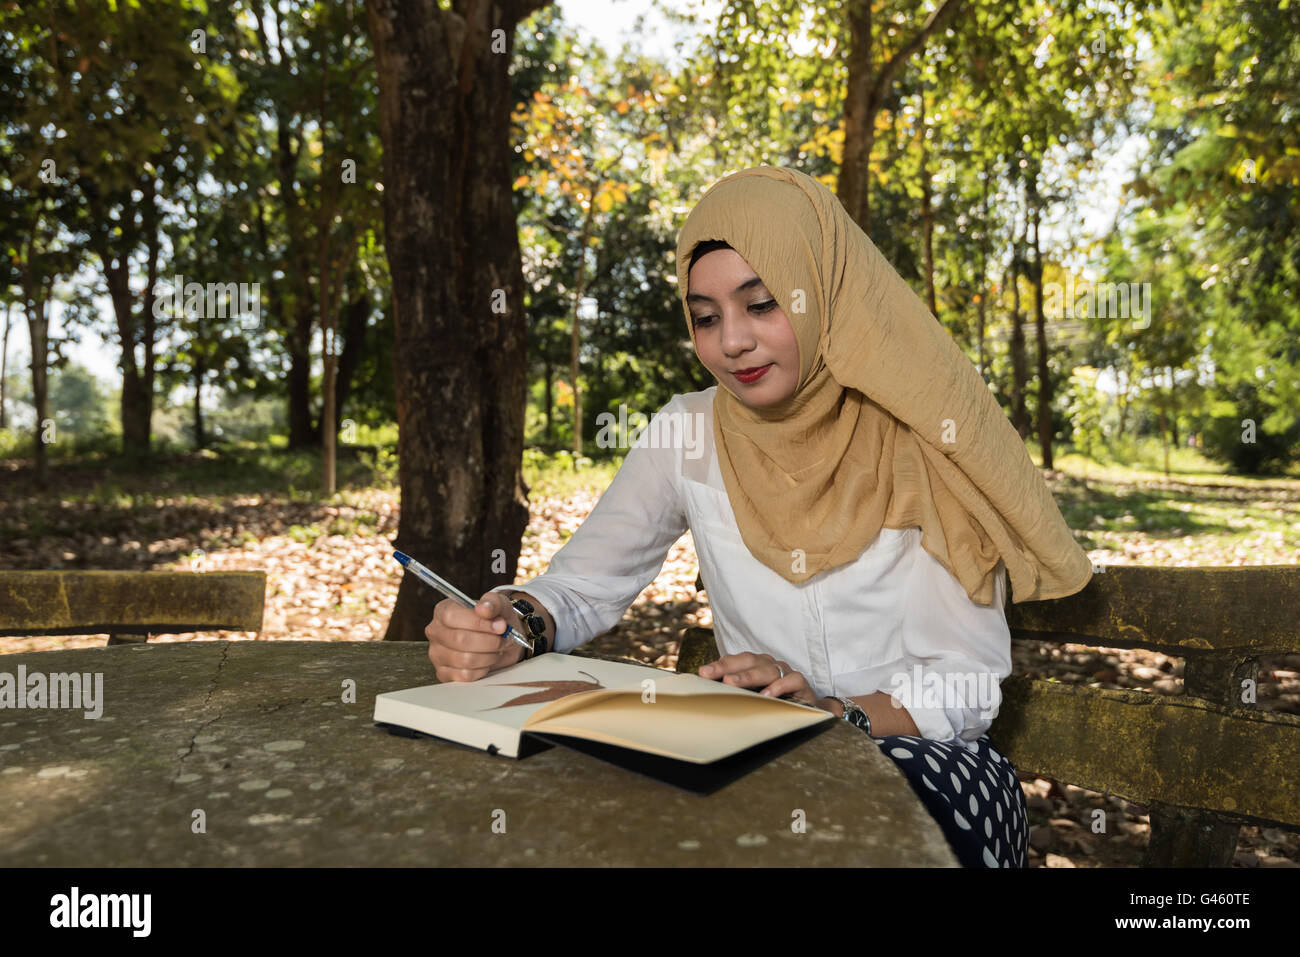 islam woman write diary Stock Photo